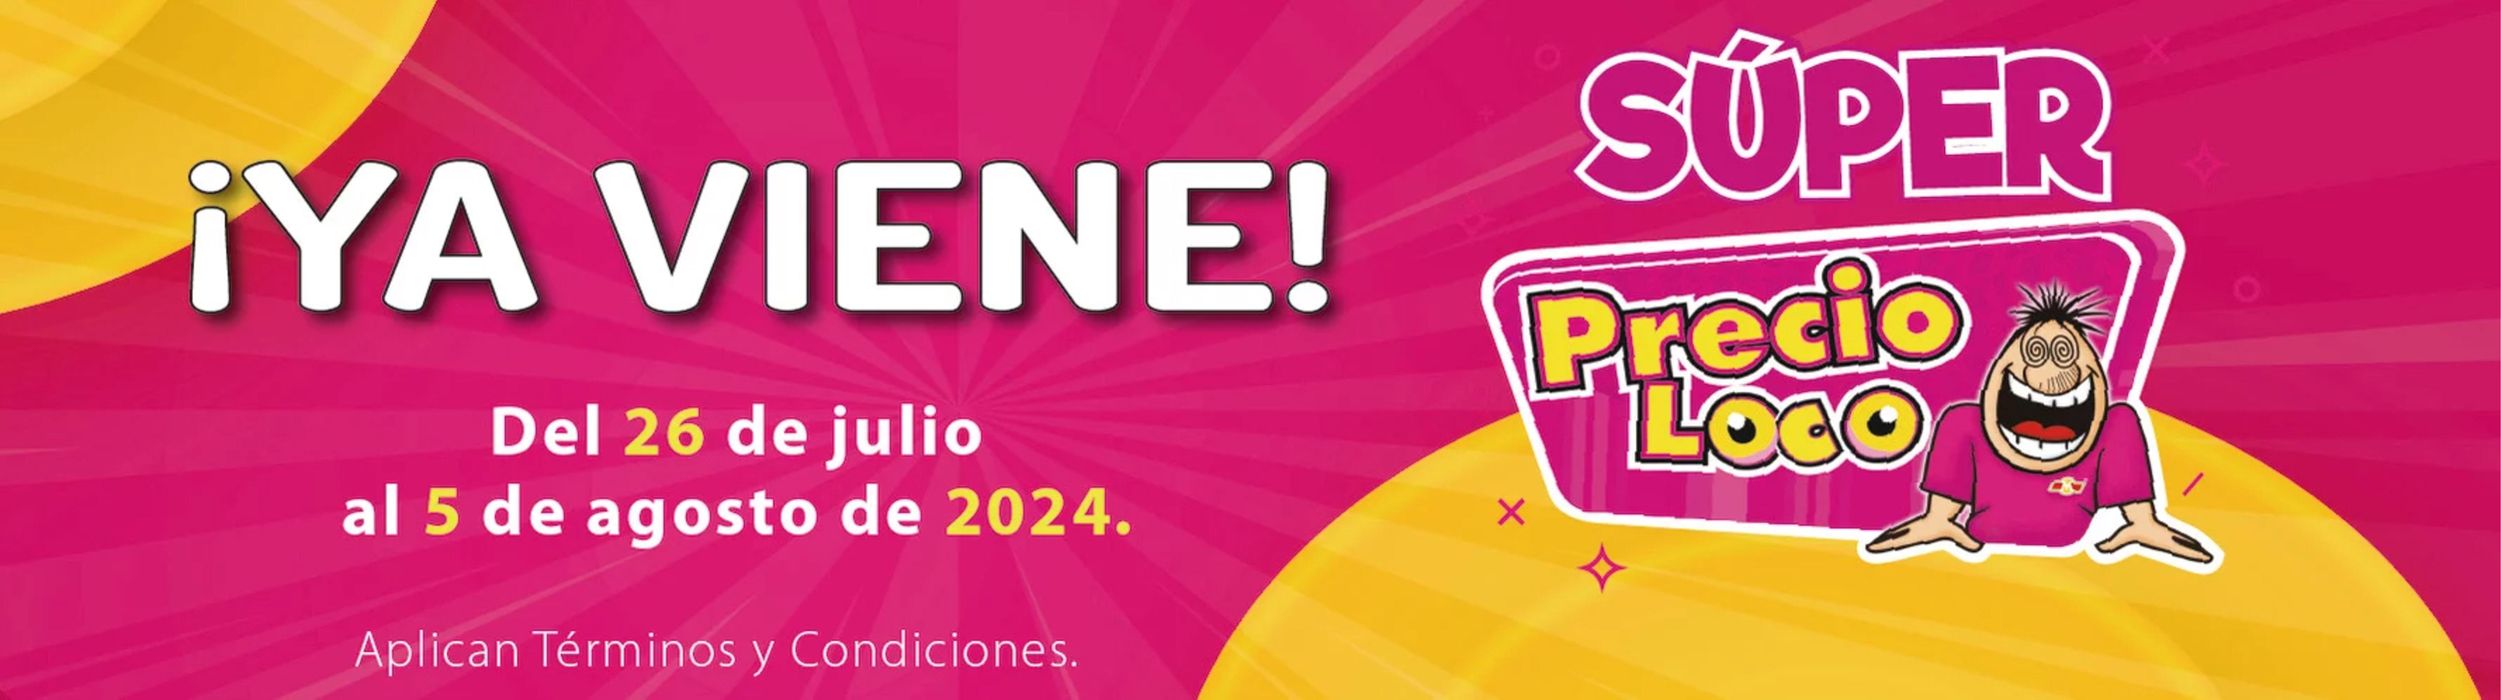 Catálogo MercaCentro | Super precios locos | 23/7/2024 - 5/8/2024